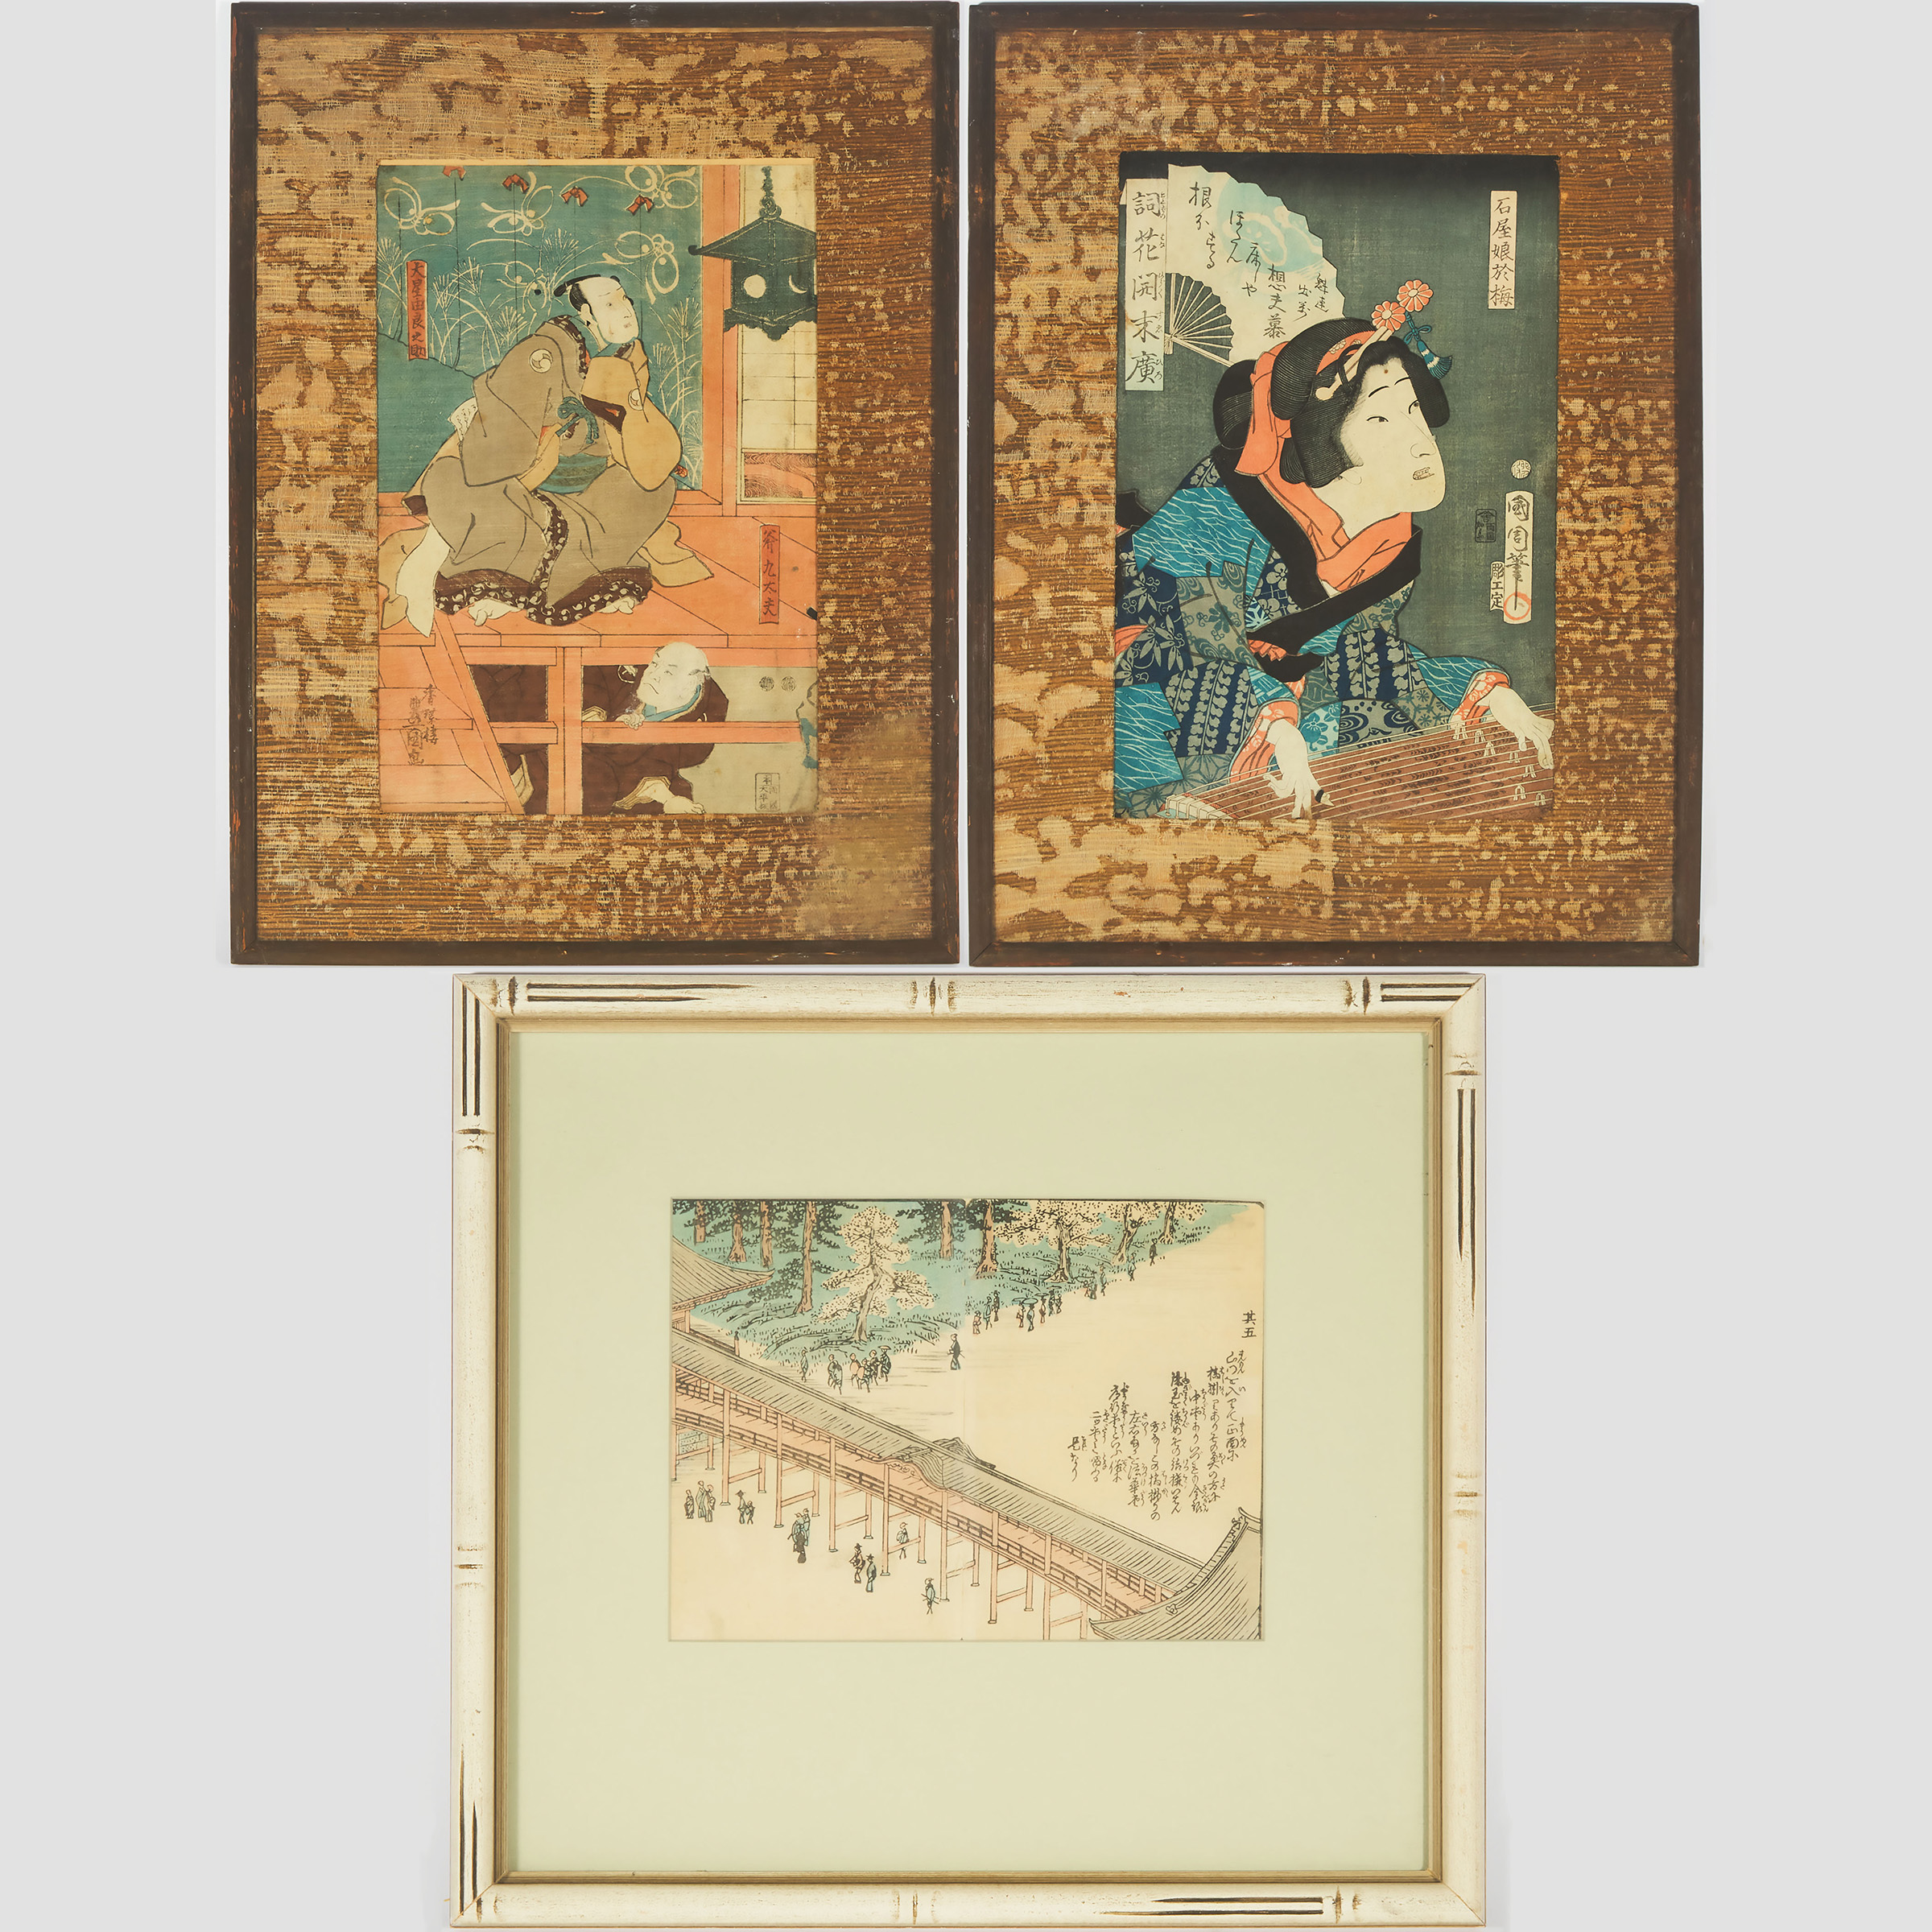 Utagawa Kunisada (Toyokuni III, 1786-1865), Toyohara Kunichika (1835-1900), and Other, Three Woodblock Prints